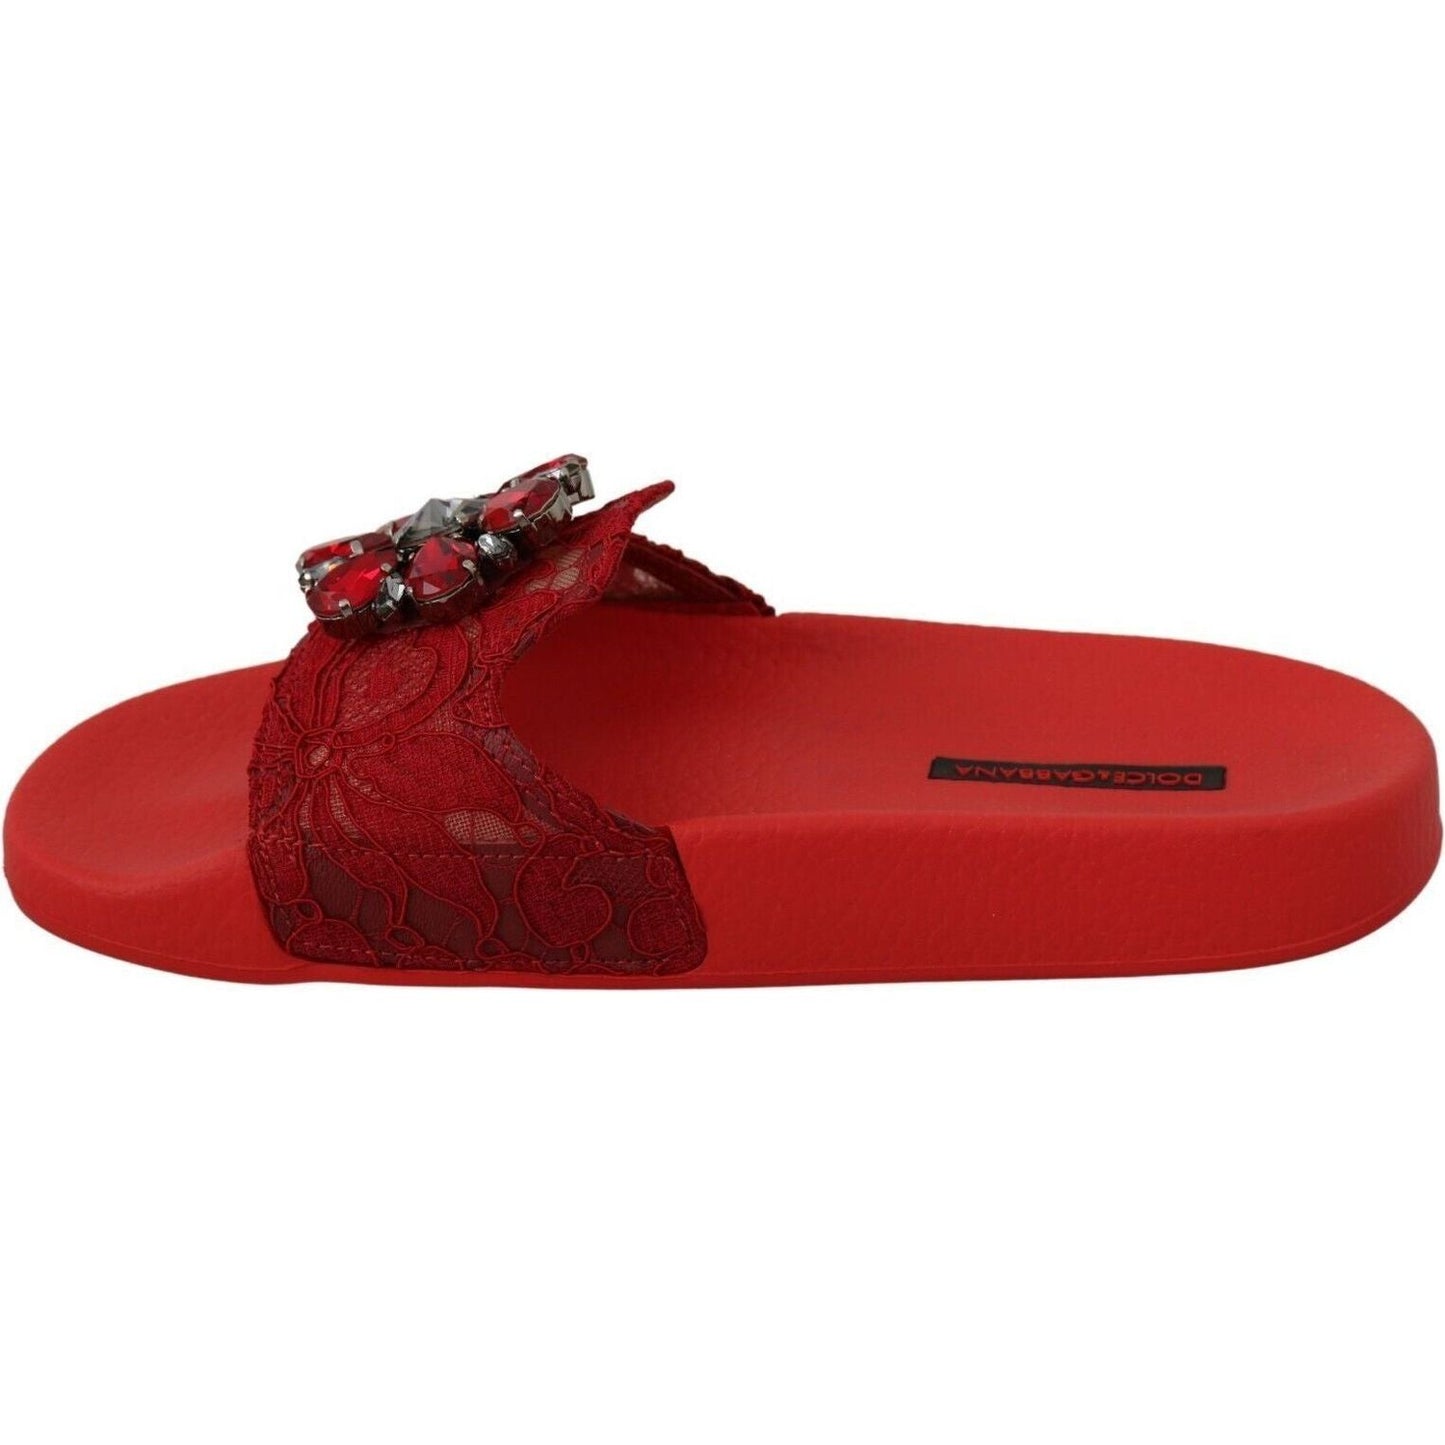 Dolce & Gabbana Floral Lace Crystal-Embellished Slide Flats red-lace-crystal-sandals-slides-beach-shoes s-l1600-32-20-d2b0668d-9ed.jpg